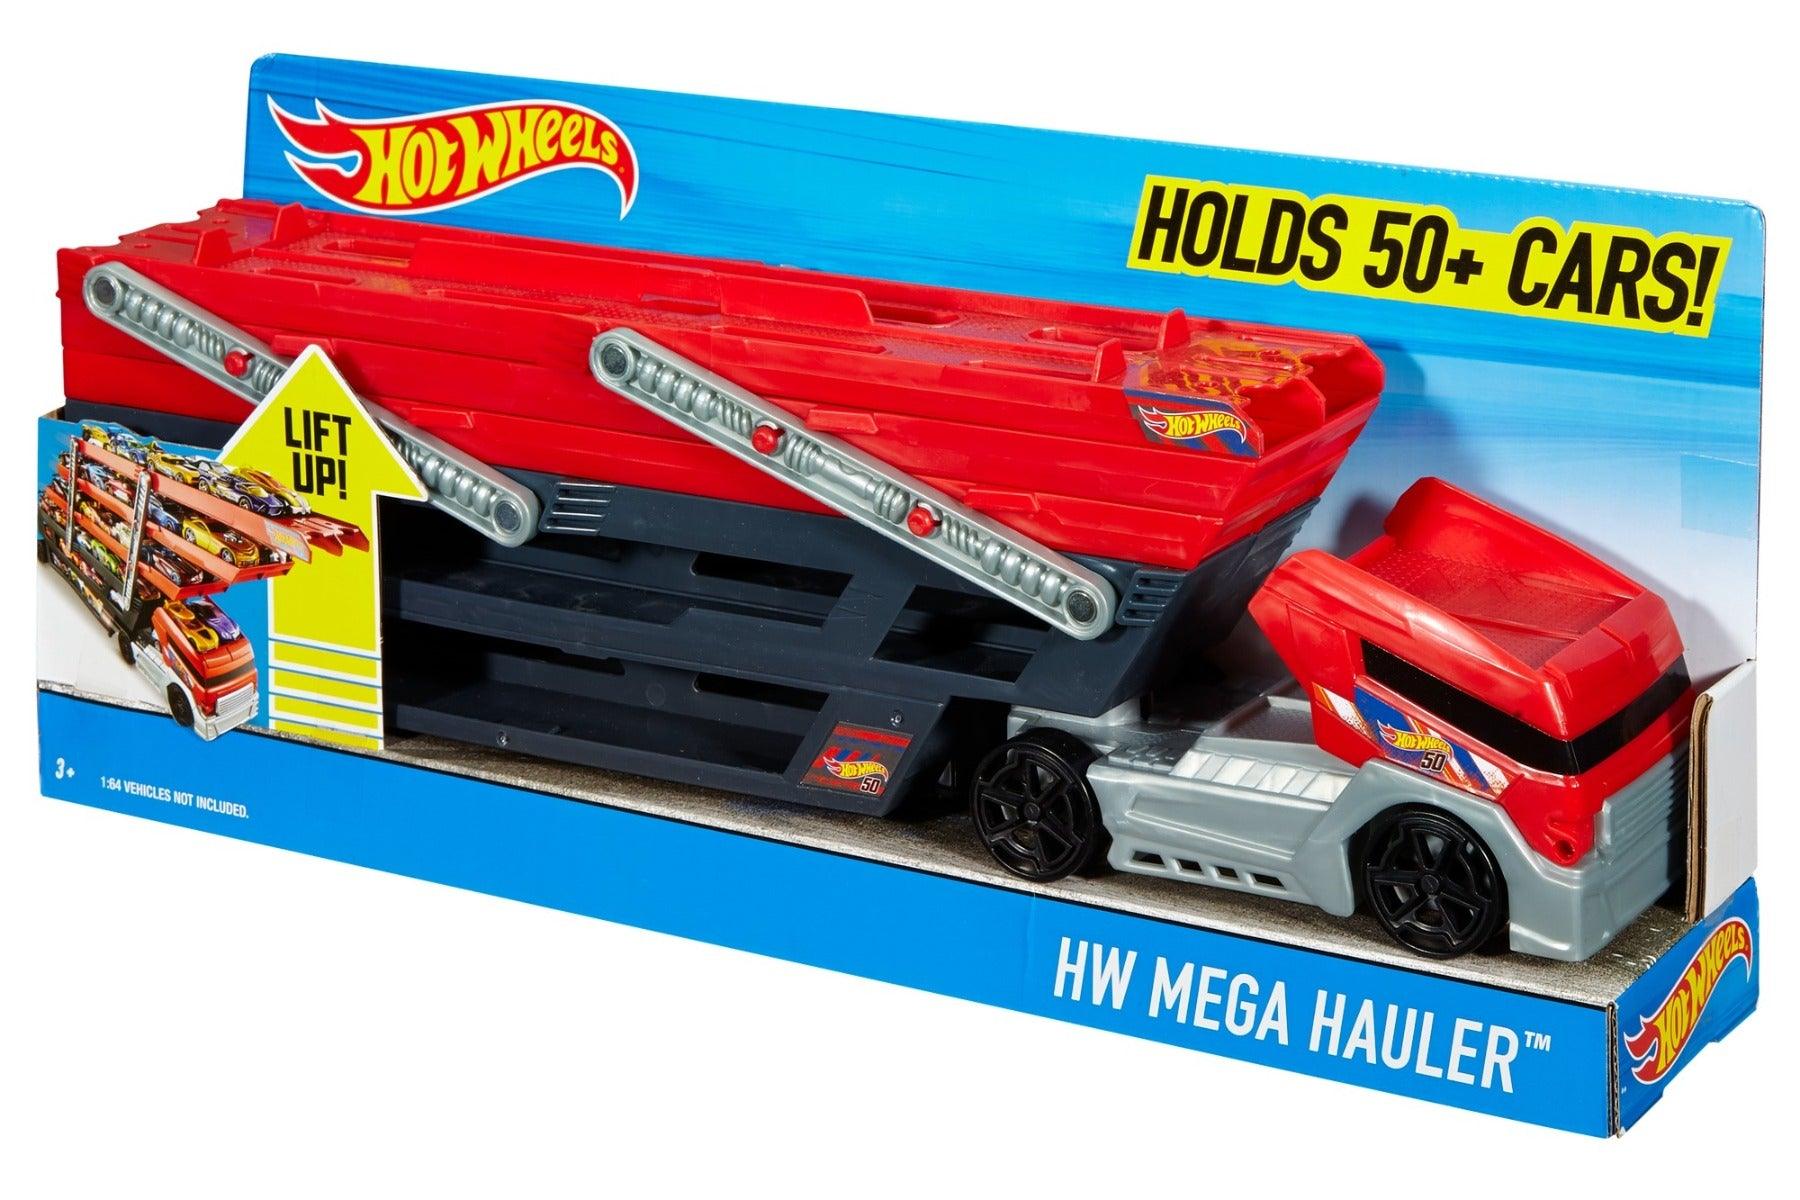 Hot Wheels Mega Hauler Hauling Rig Truck - Cars Not Included